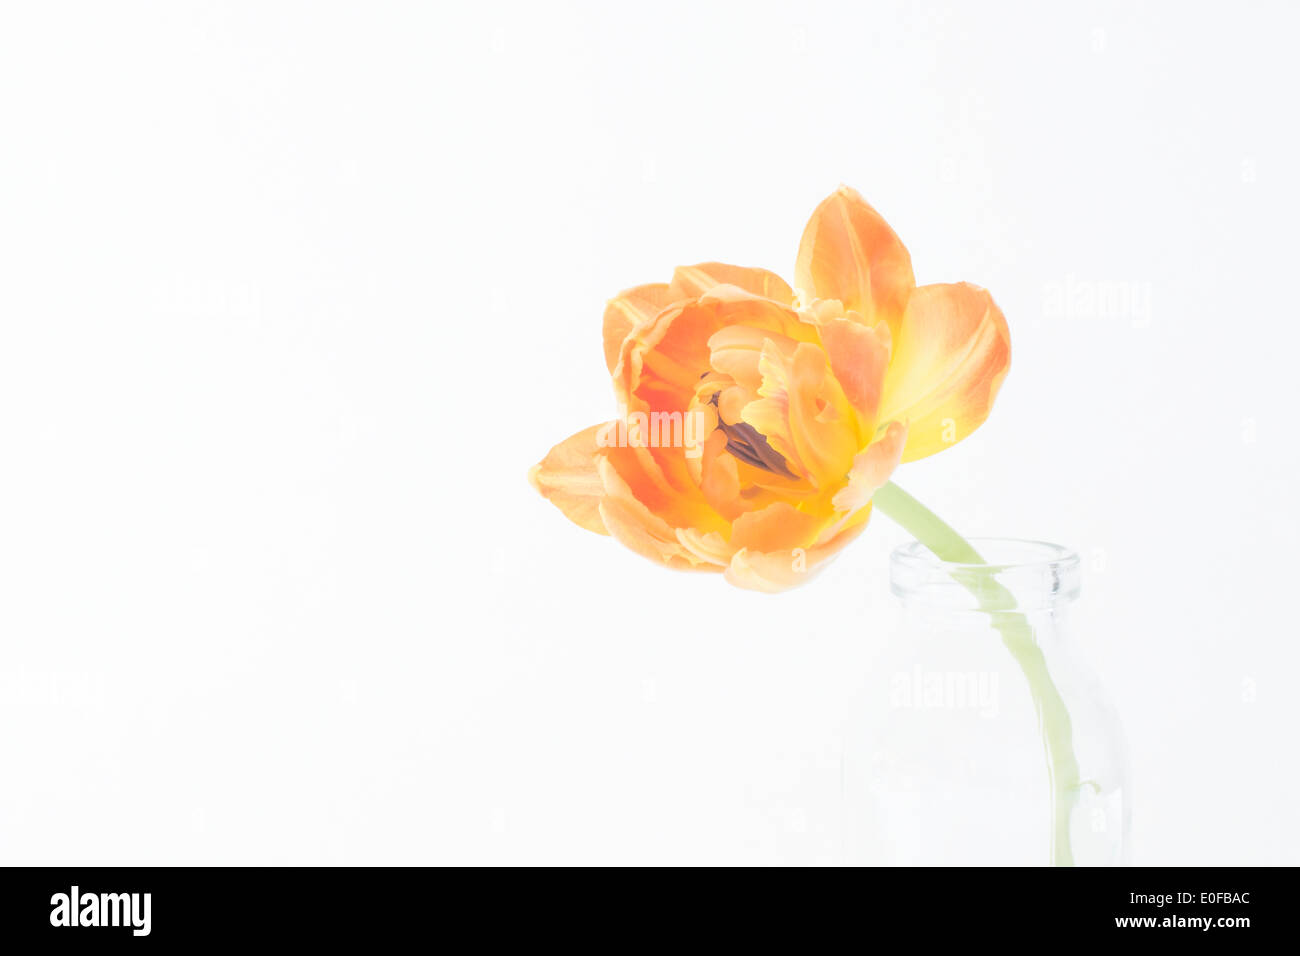 Seul tulip, une photographie d'une tulipe orange. Banque D'Images